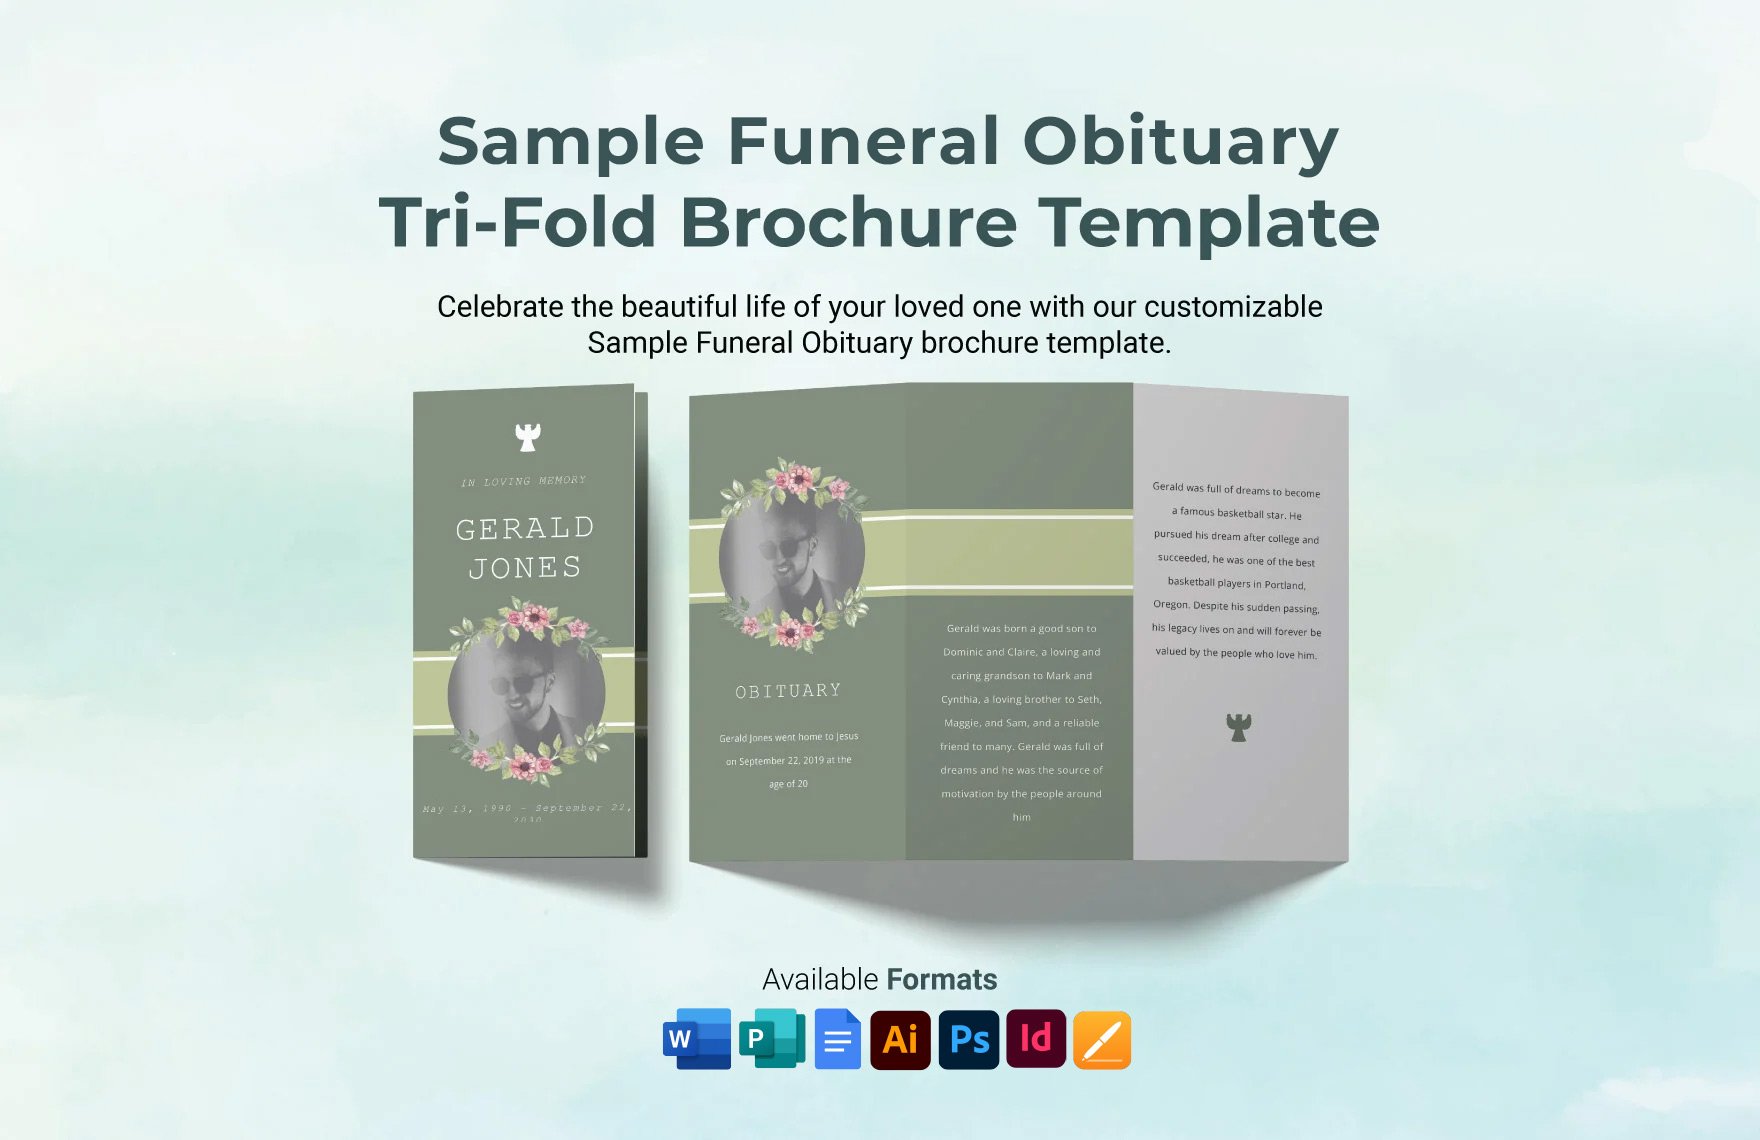 Sample Funeral Obituary Tri-Fold Brochure Template